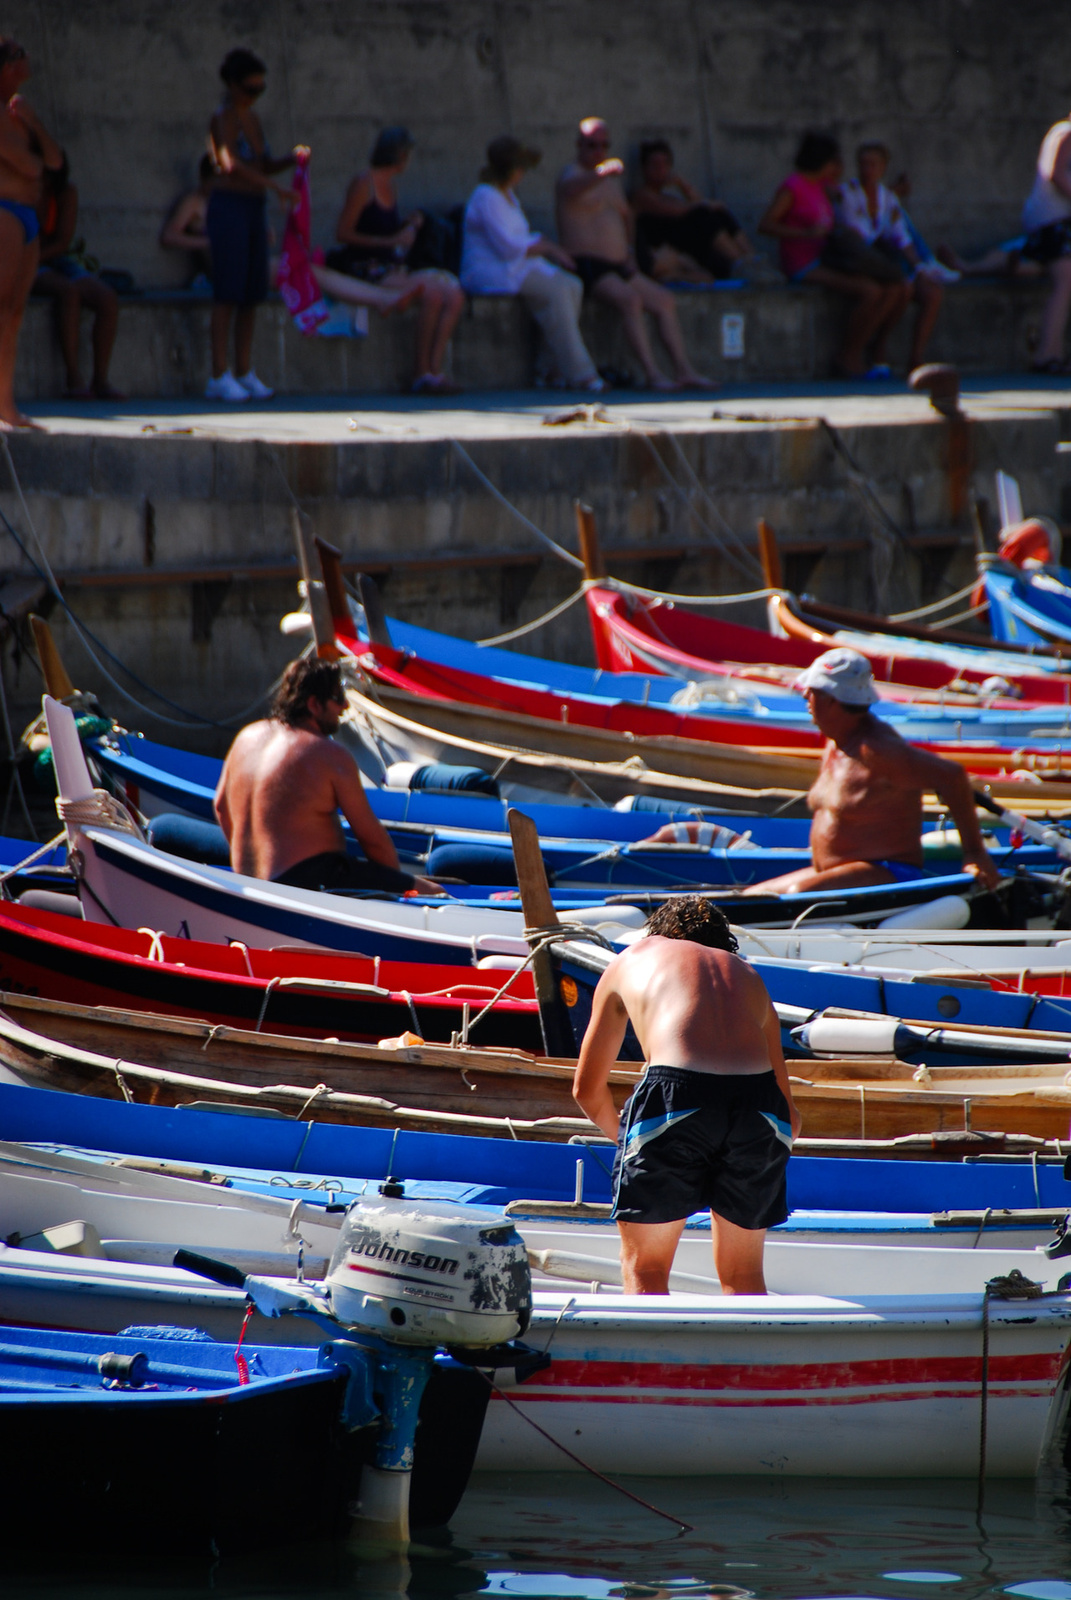 Boats In Vernazza, Italy